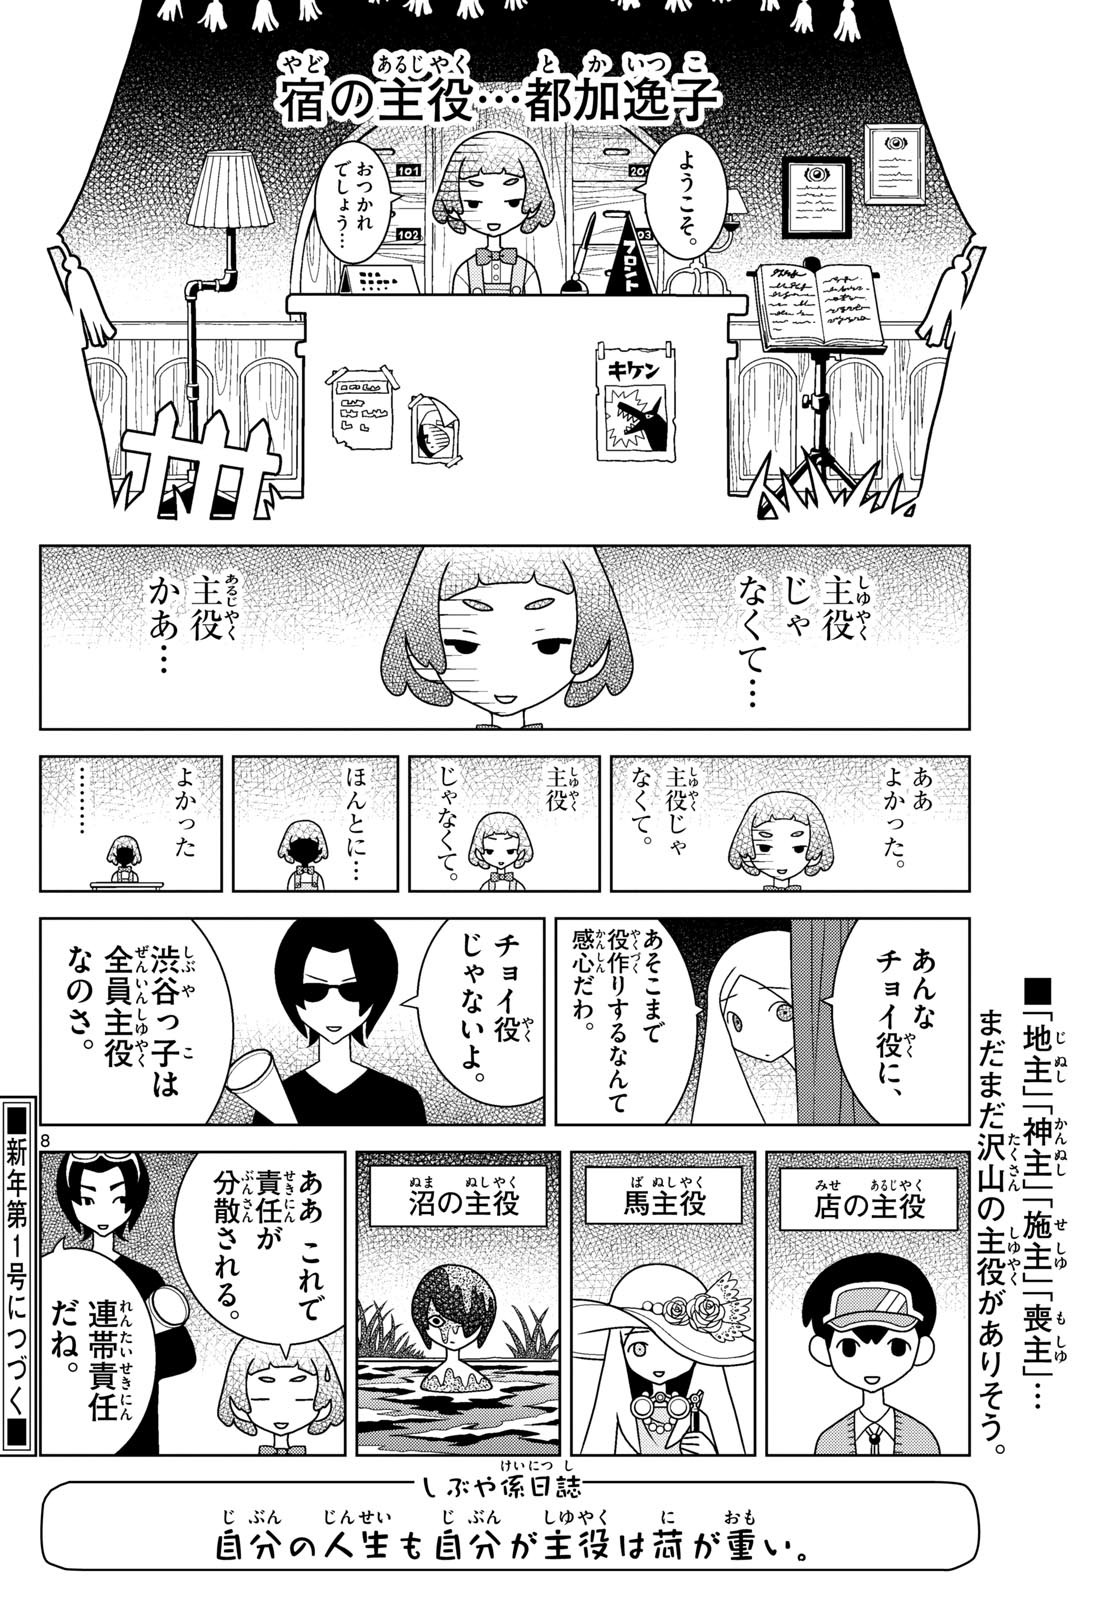 Shibuya Near Family - Chapter 079 - Page 8